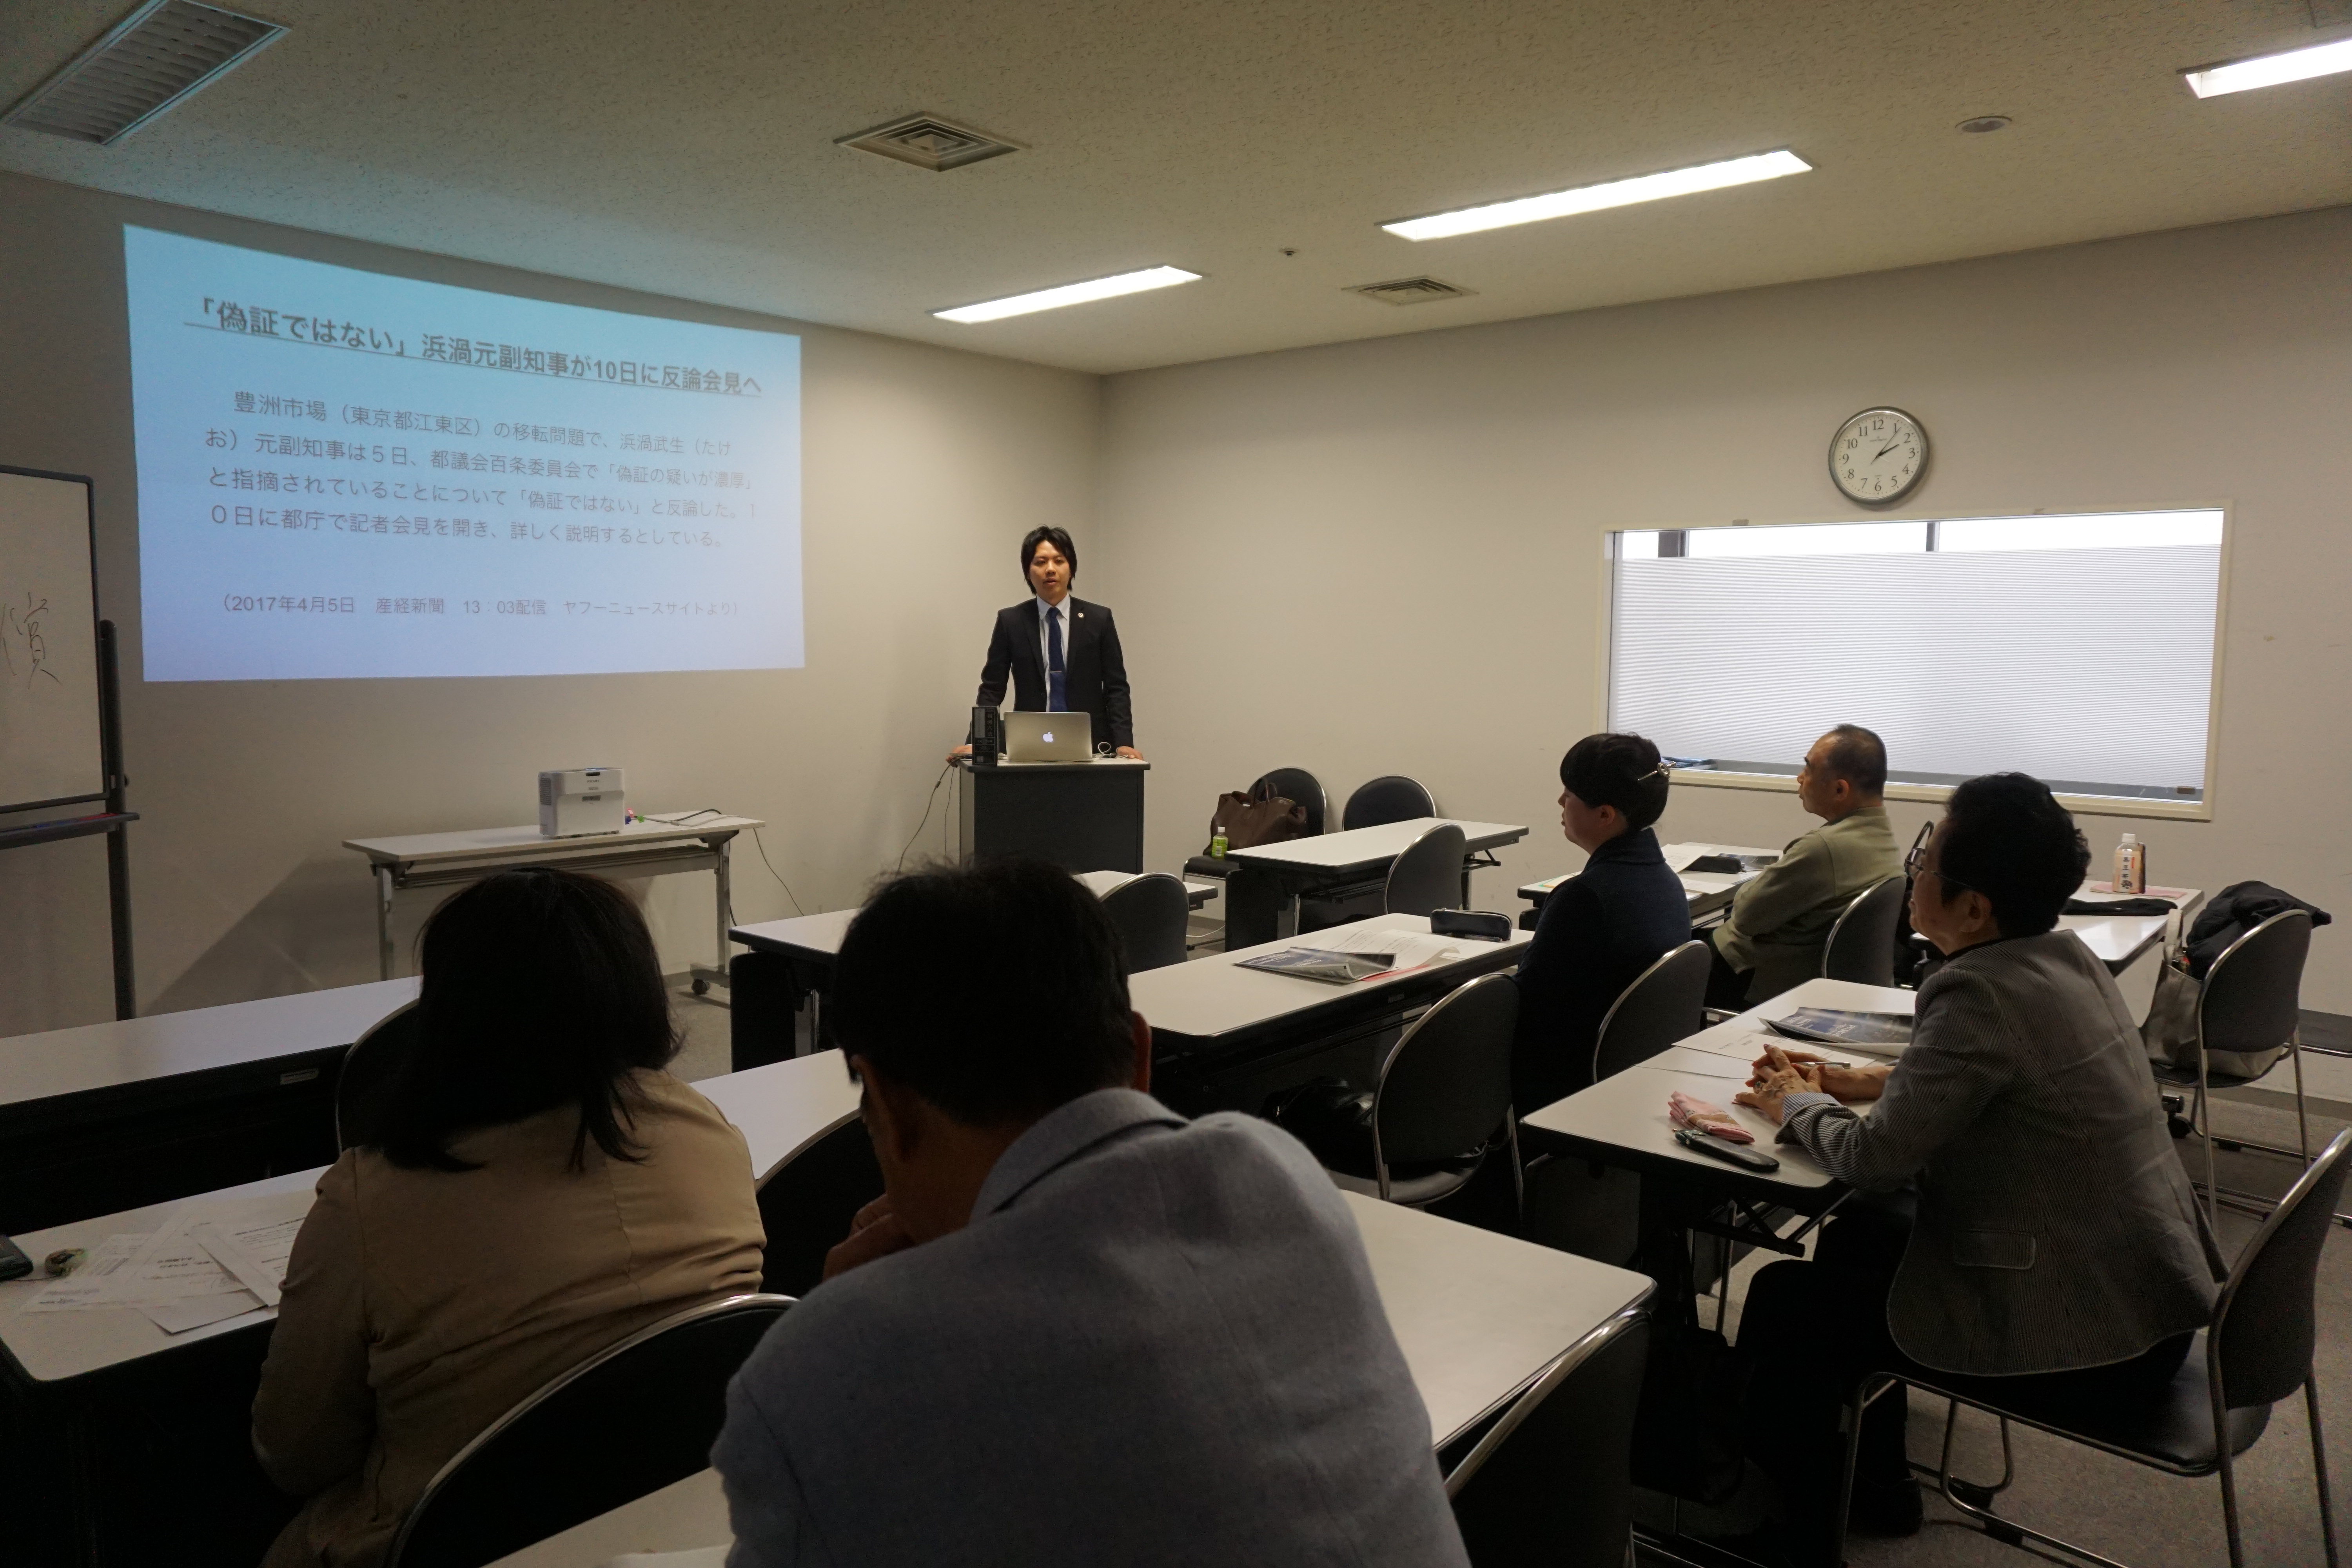 NHKカルチャー福岡教室で相続セミナーを開催